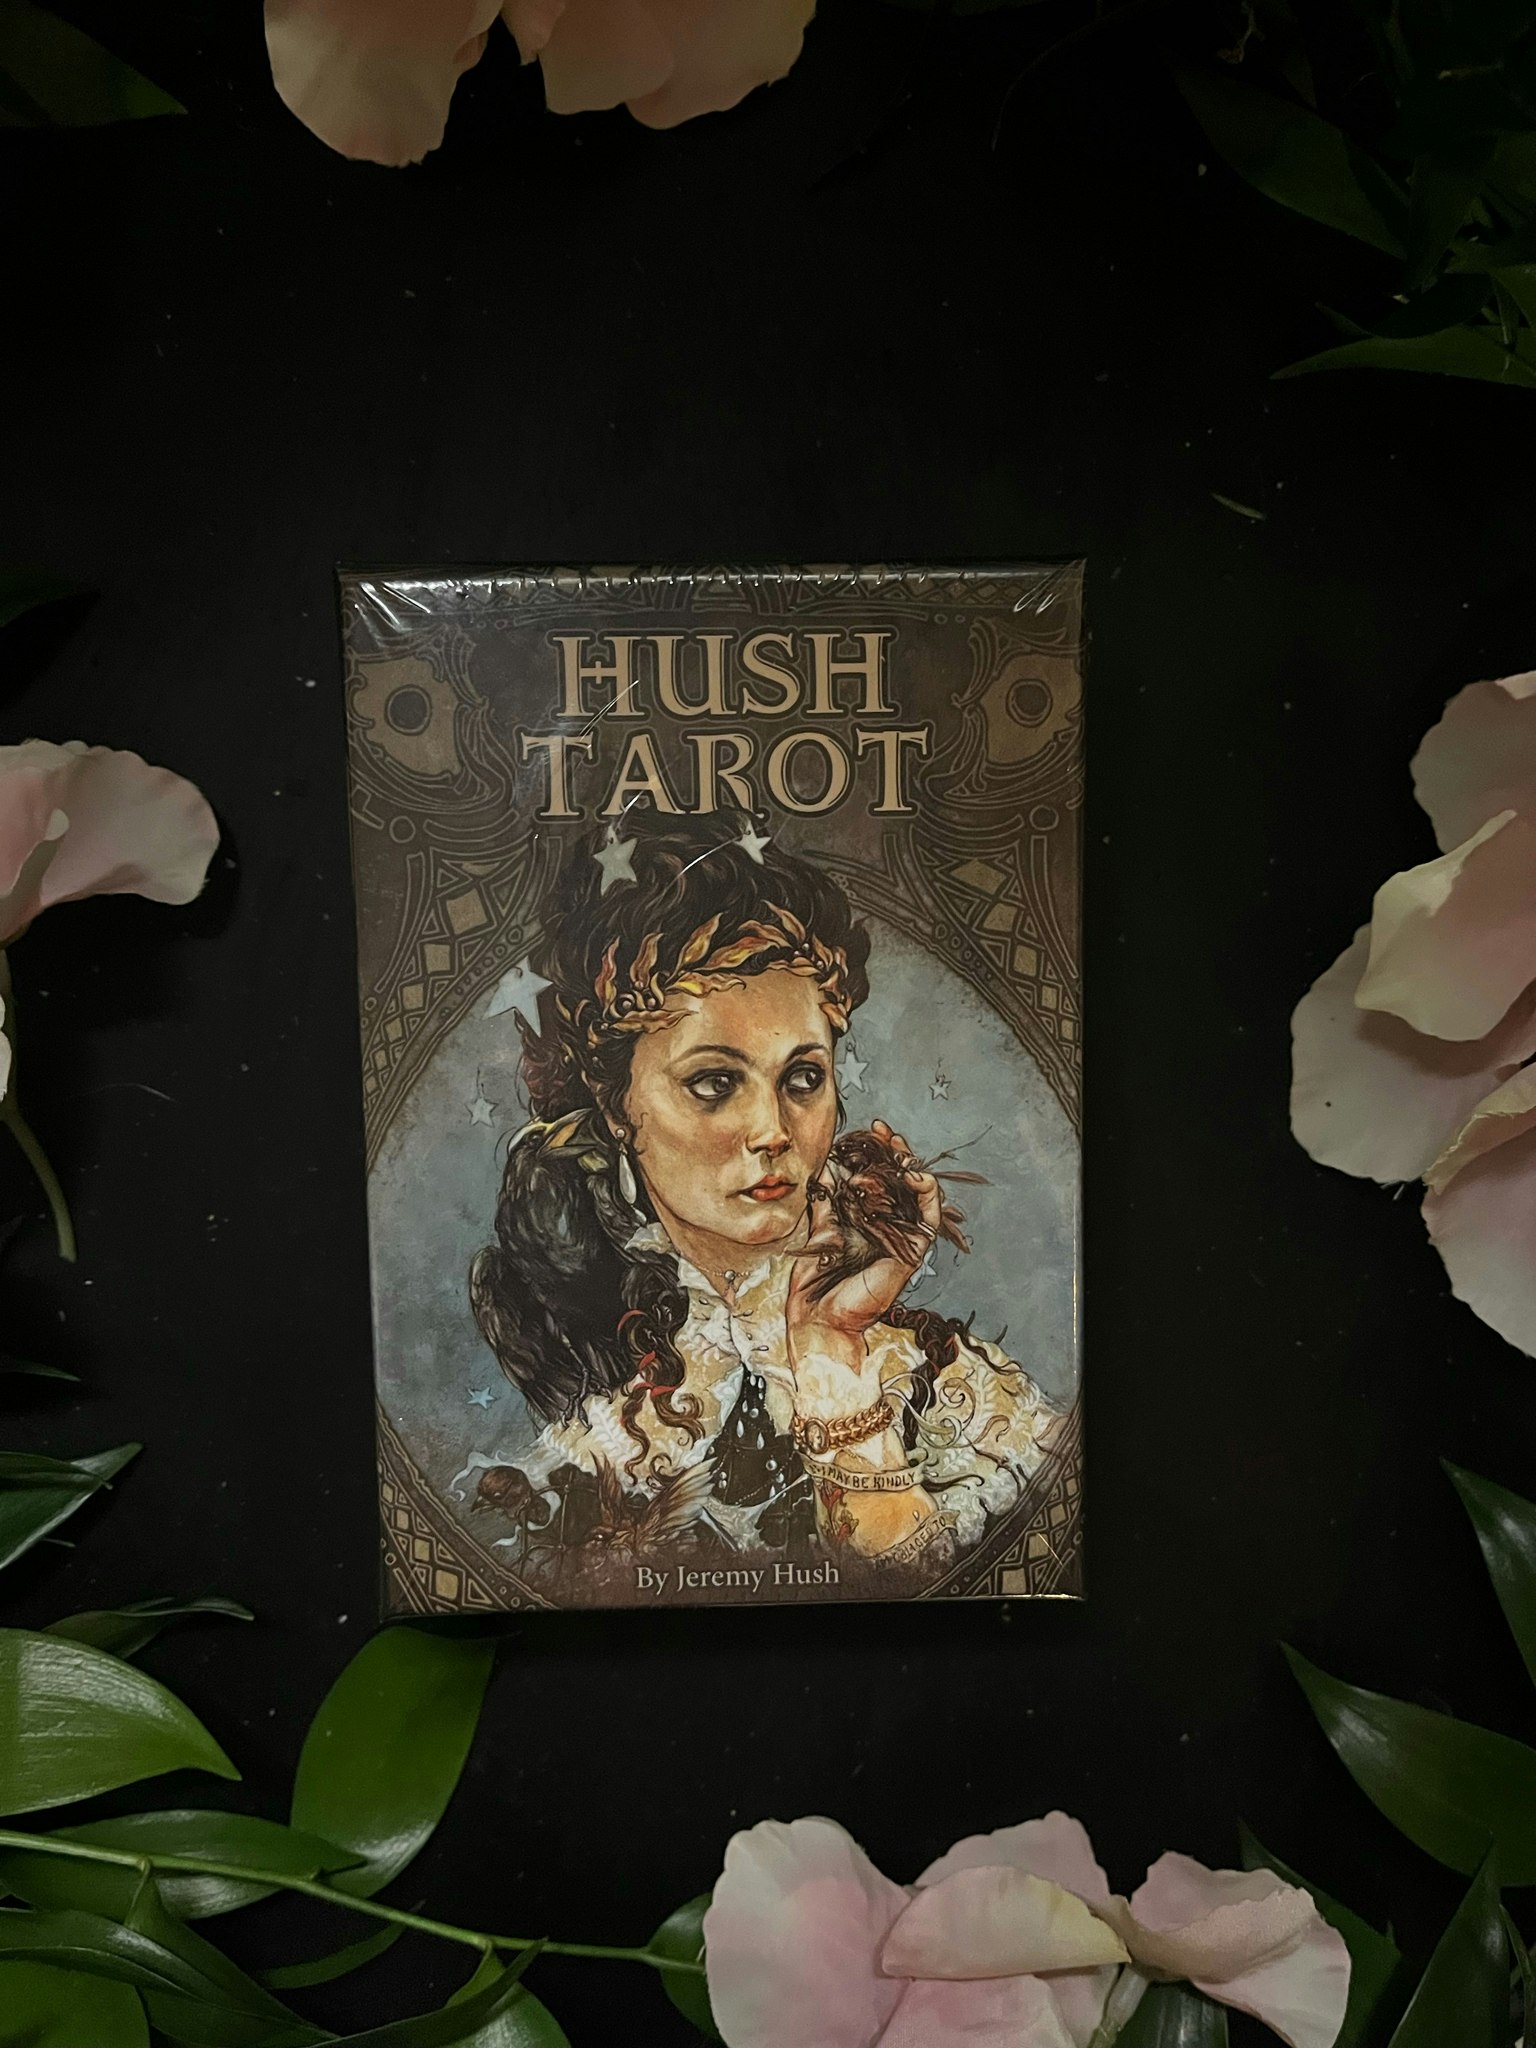 Hush tarot